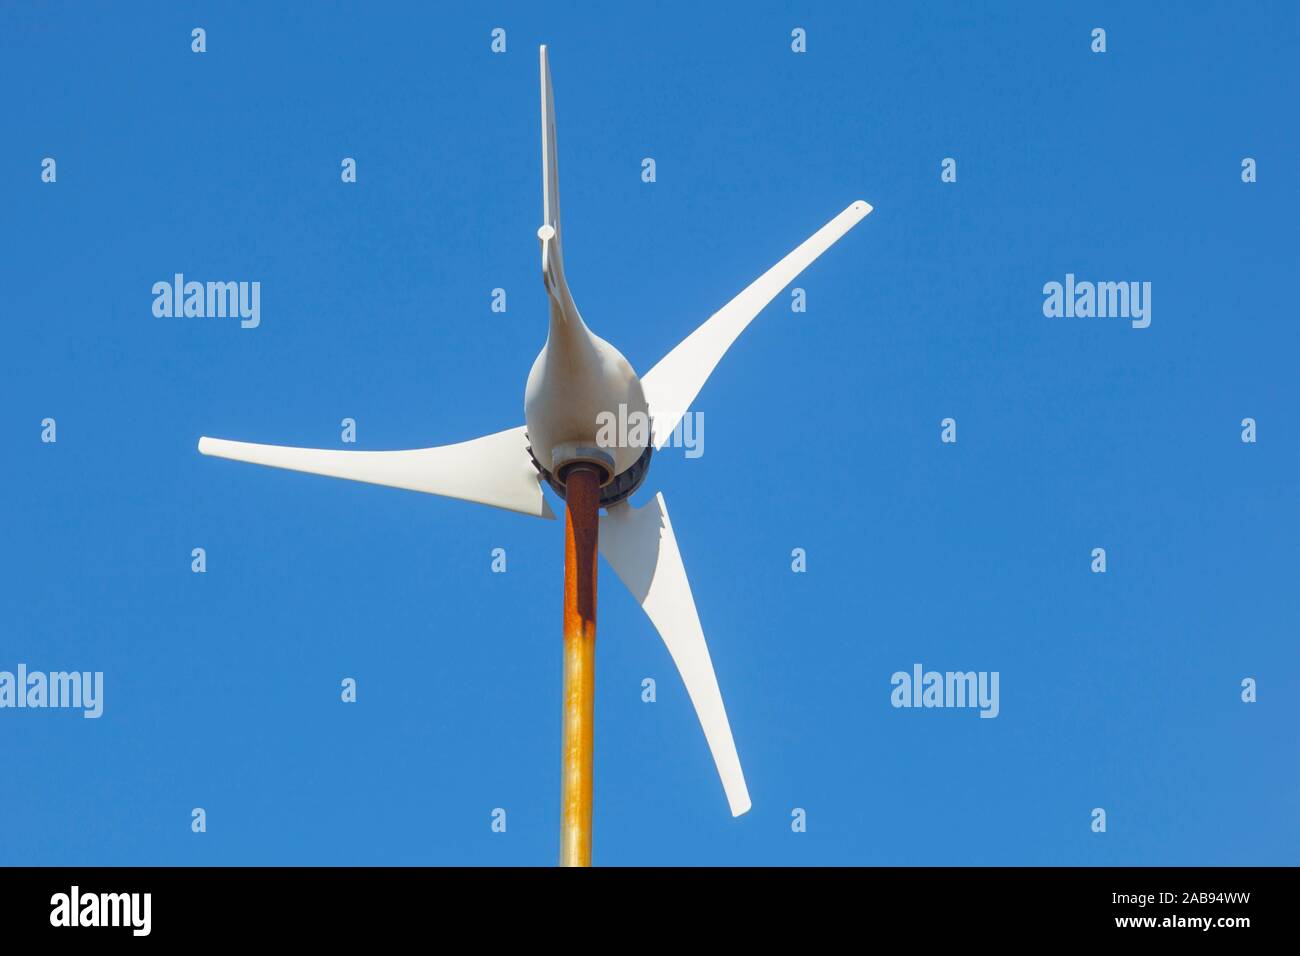 Domestic Wind Turbine mounted over metalic pole. Blue sky background. Stock Photo